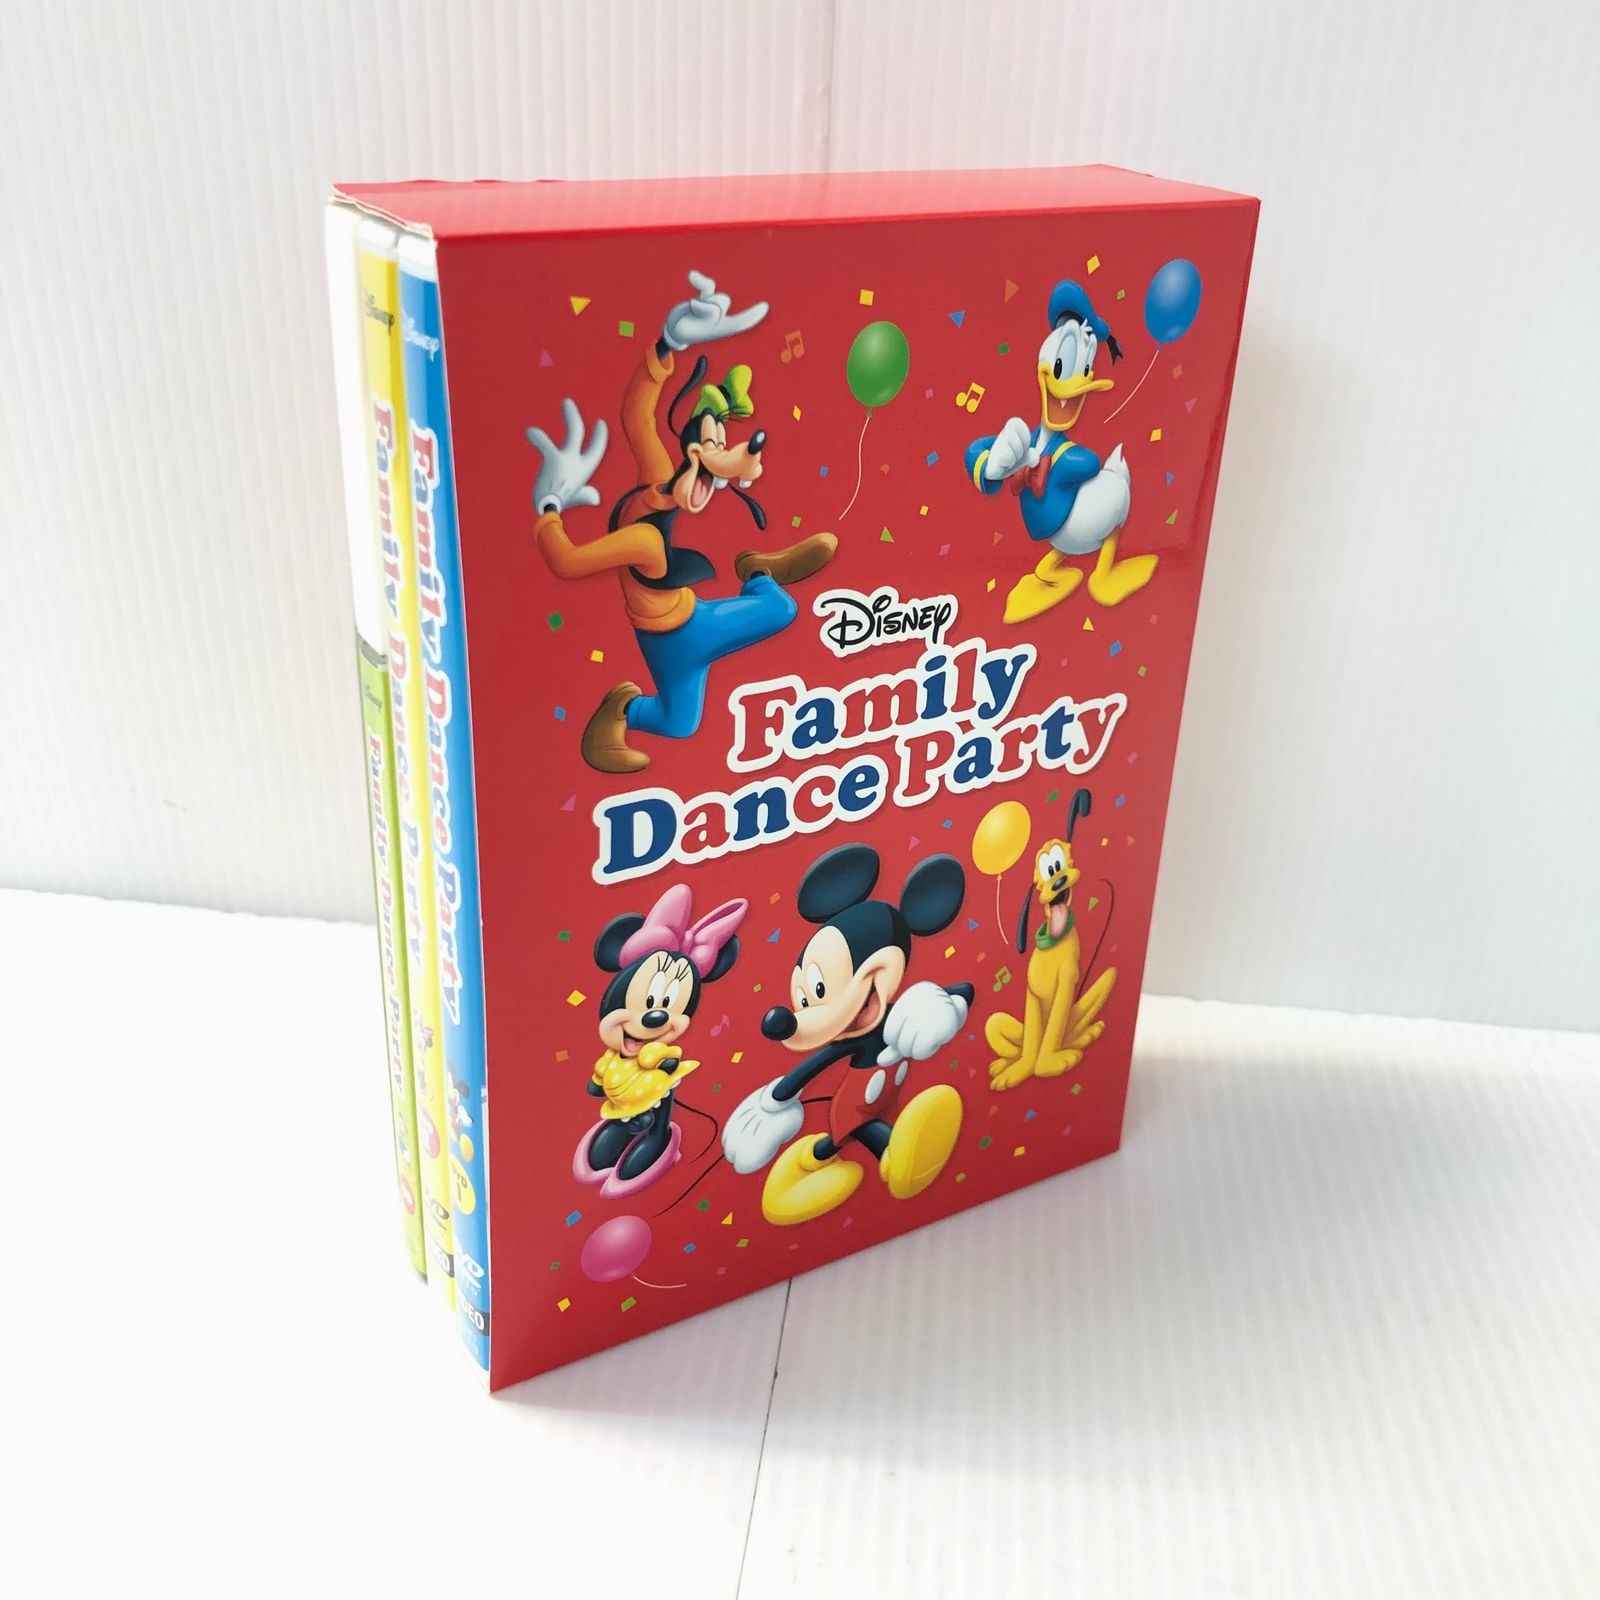 DWE Family Dance!Dance! ワールドファミリーダンス DVD - ブルーレイ